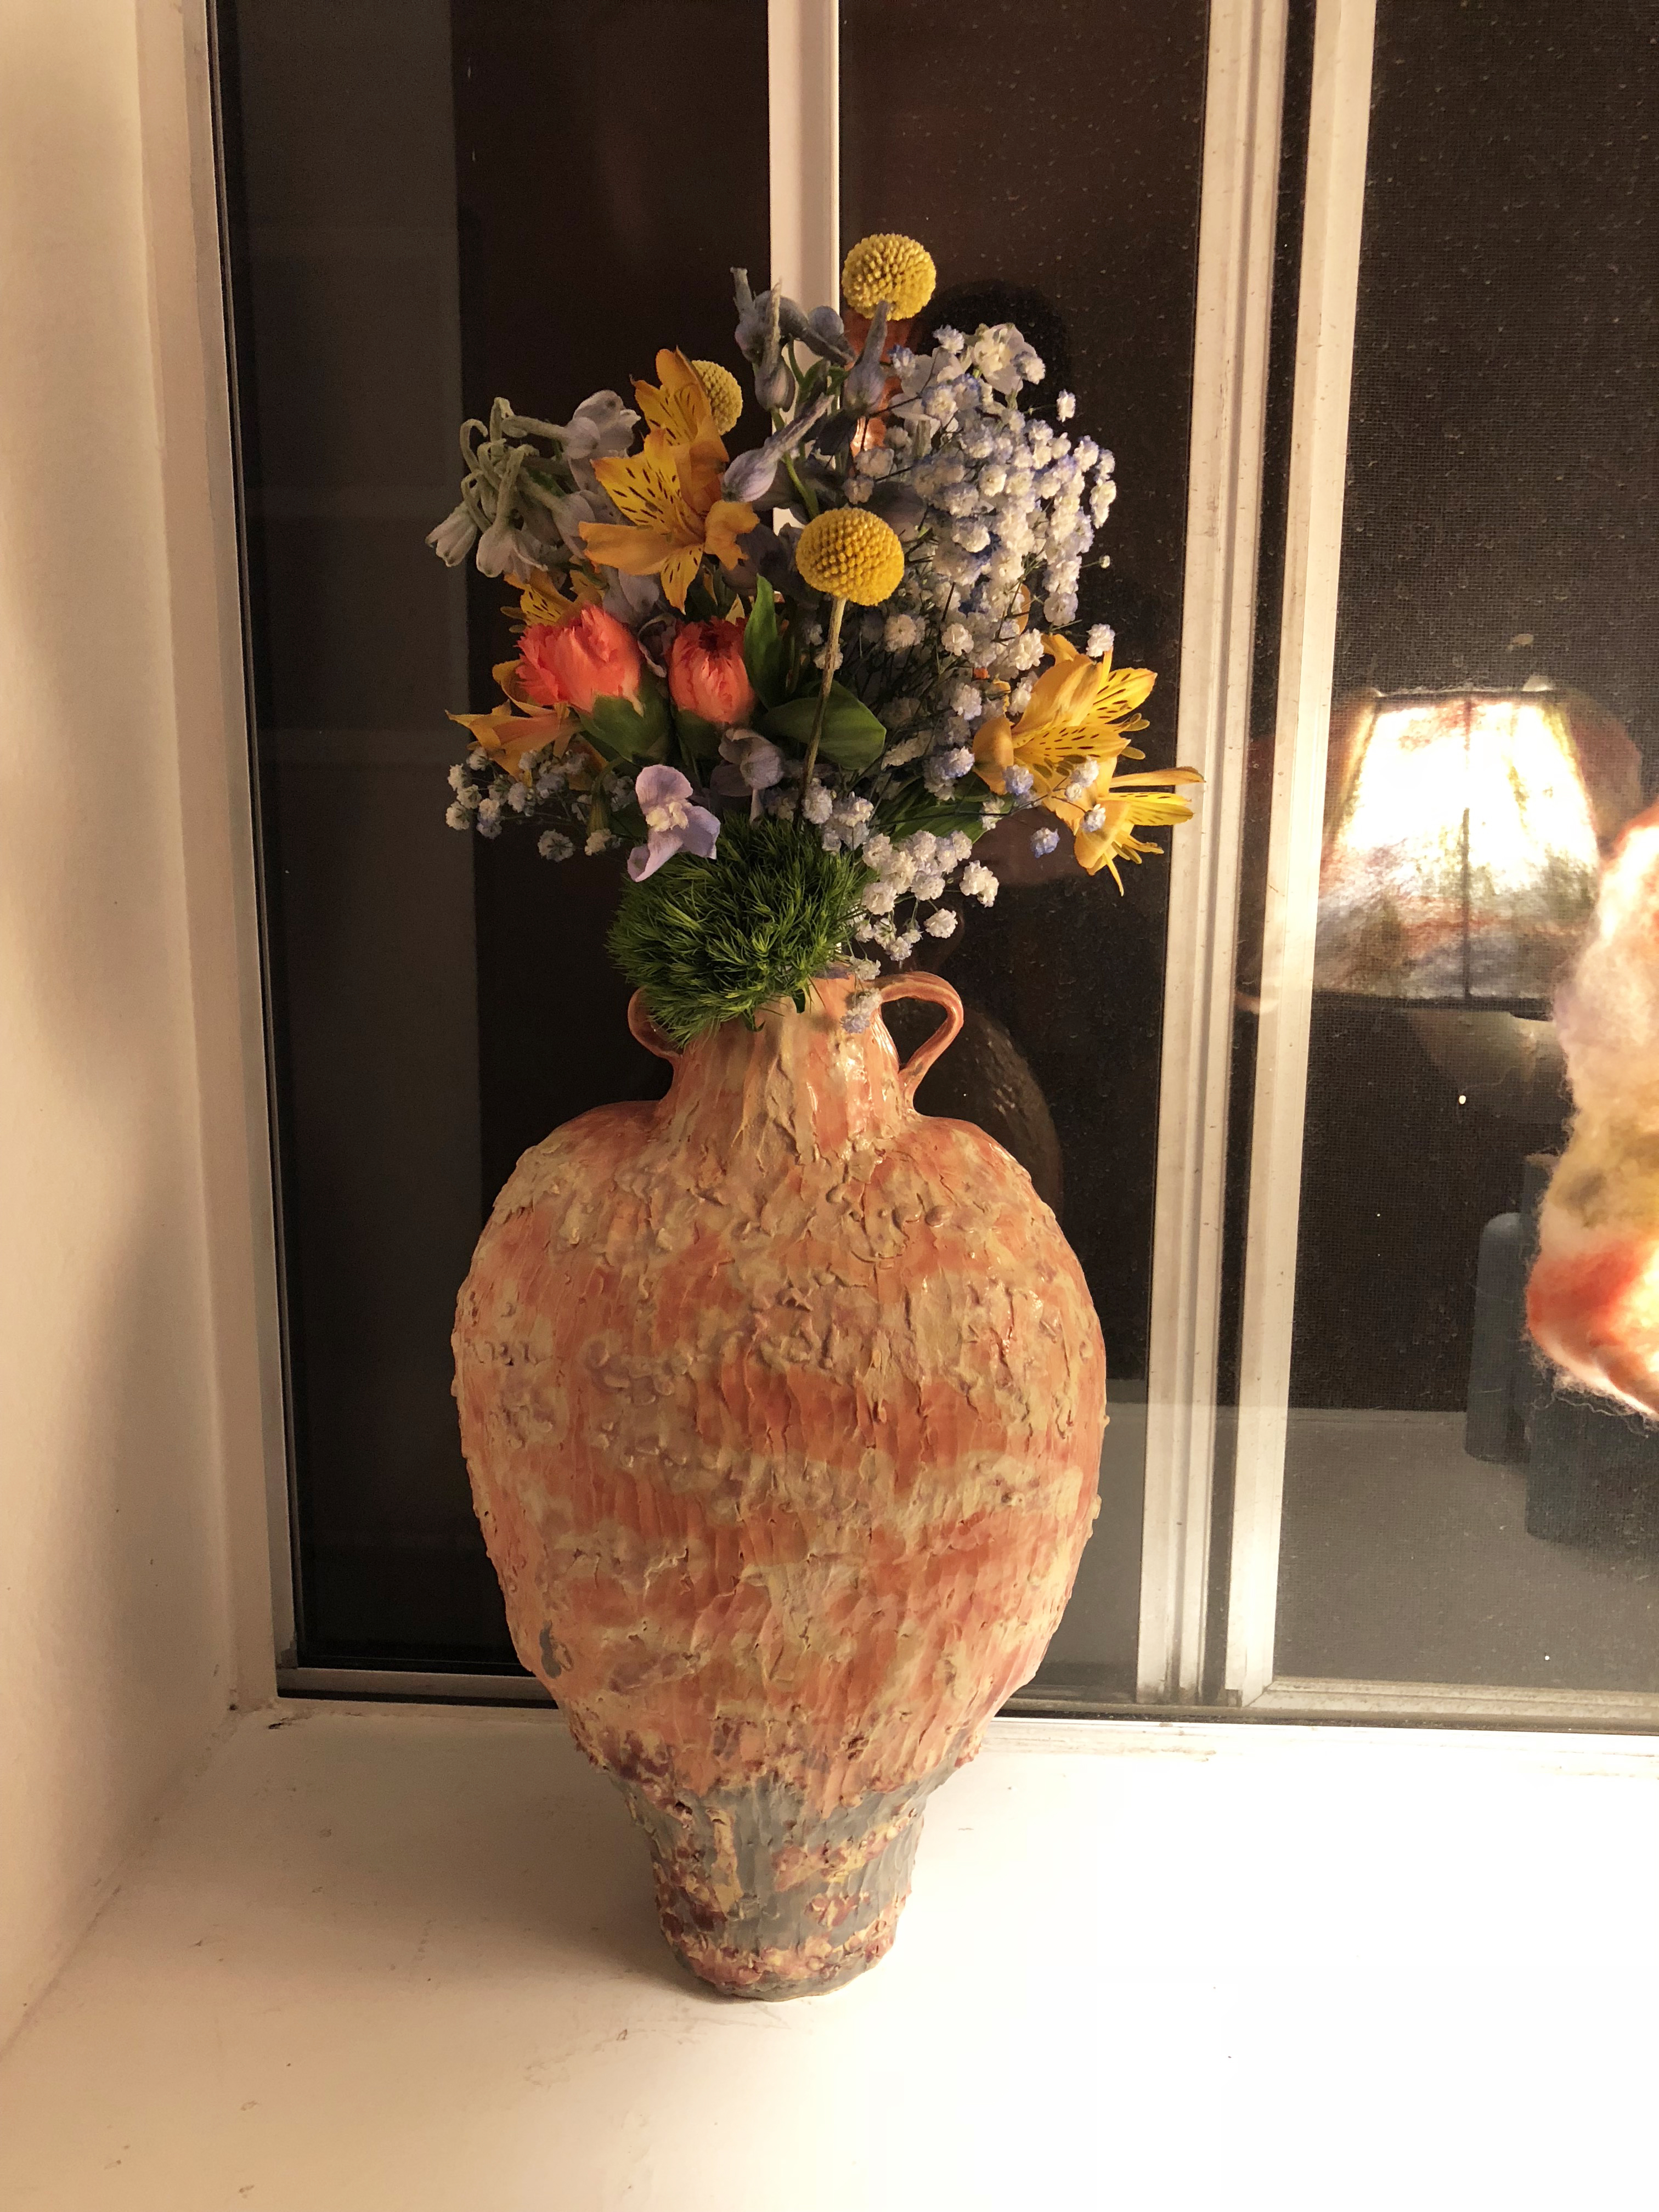 An orange ceramic vase with flowers on a windowsill